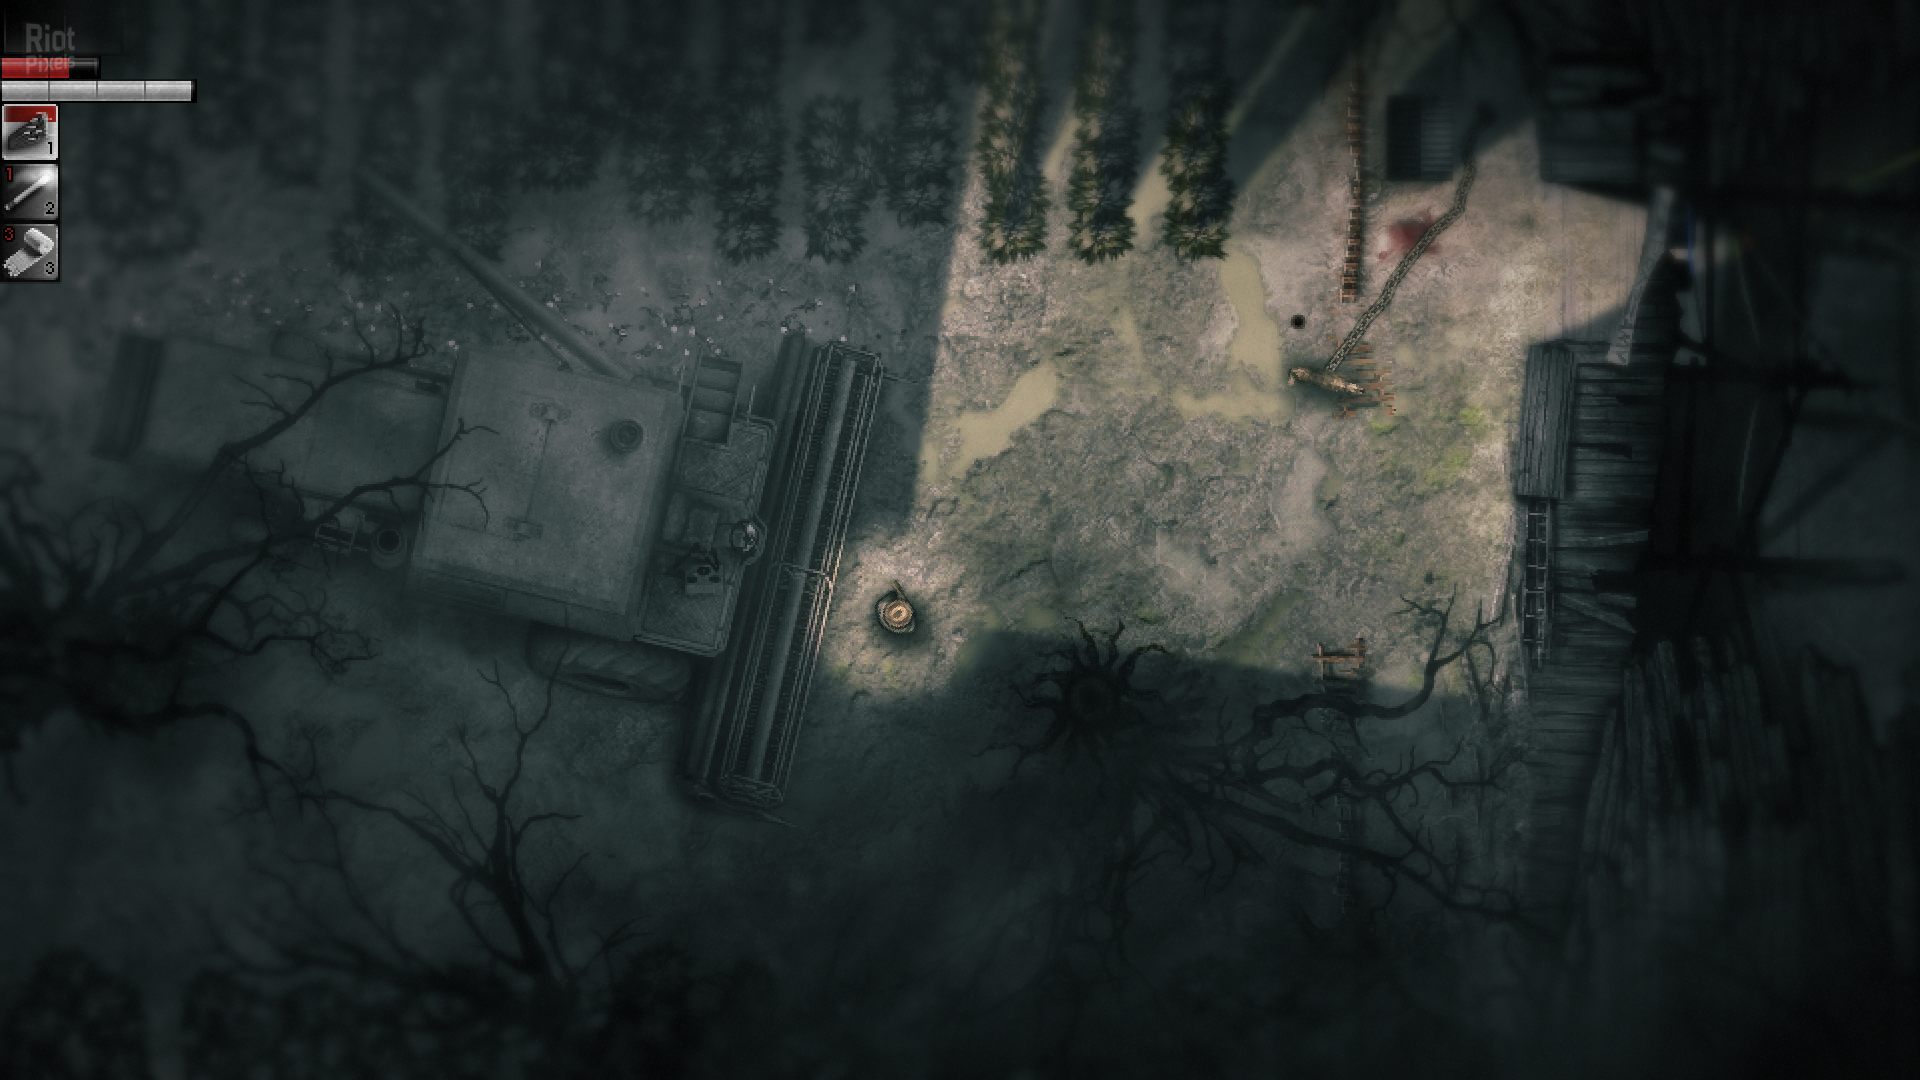 Darkwood - game screenshots at Riot Pixels, images